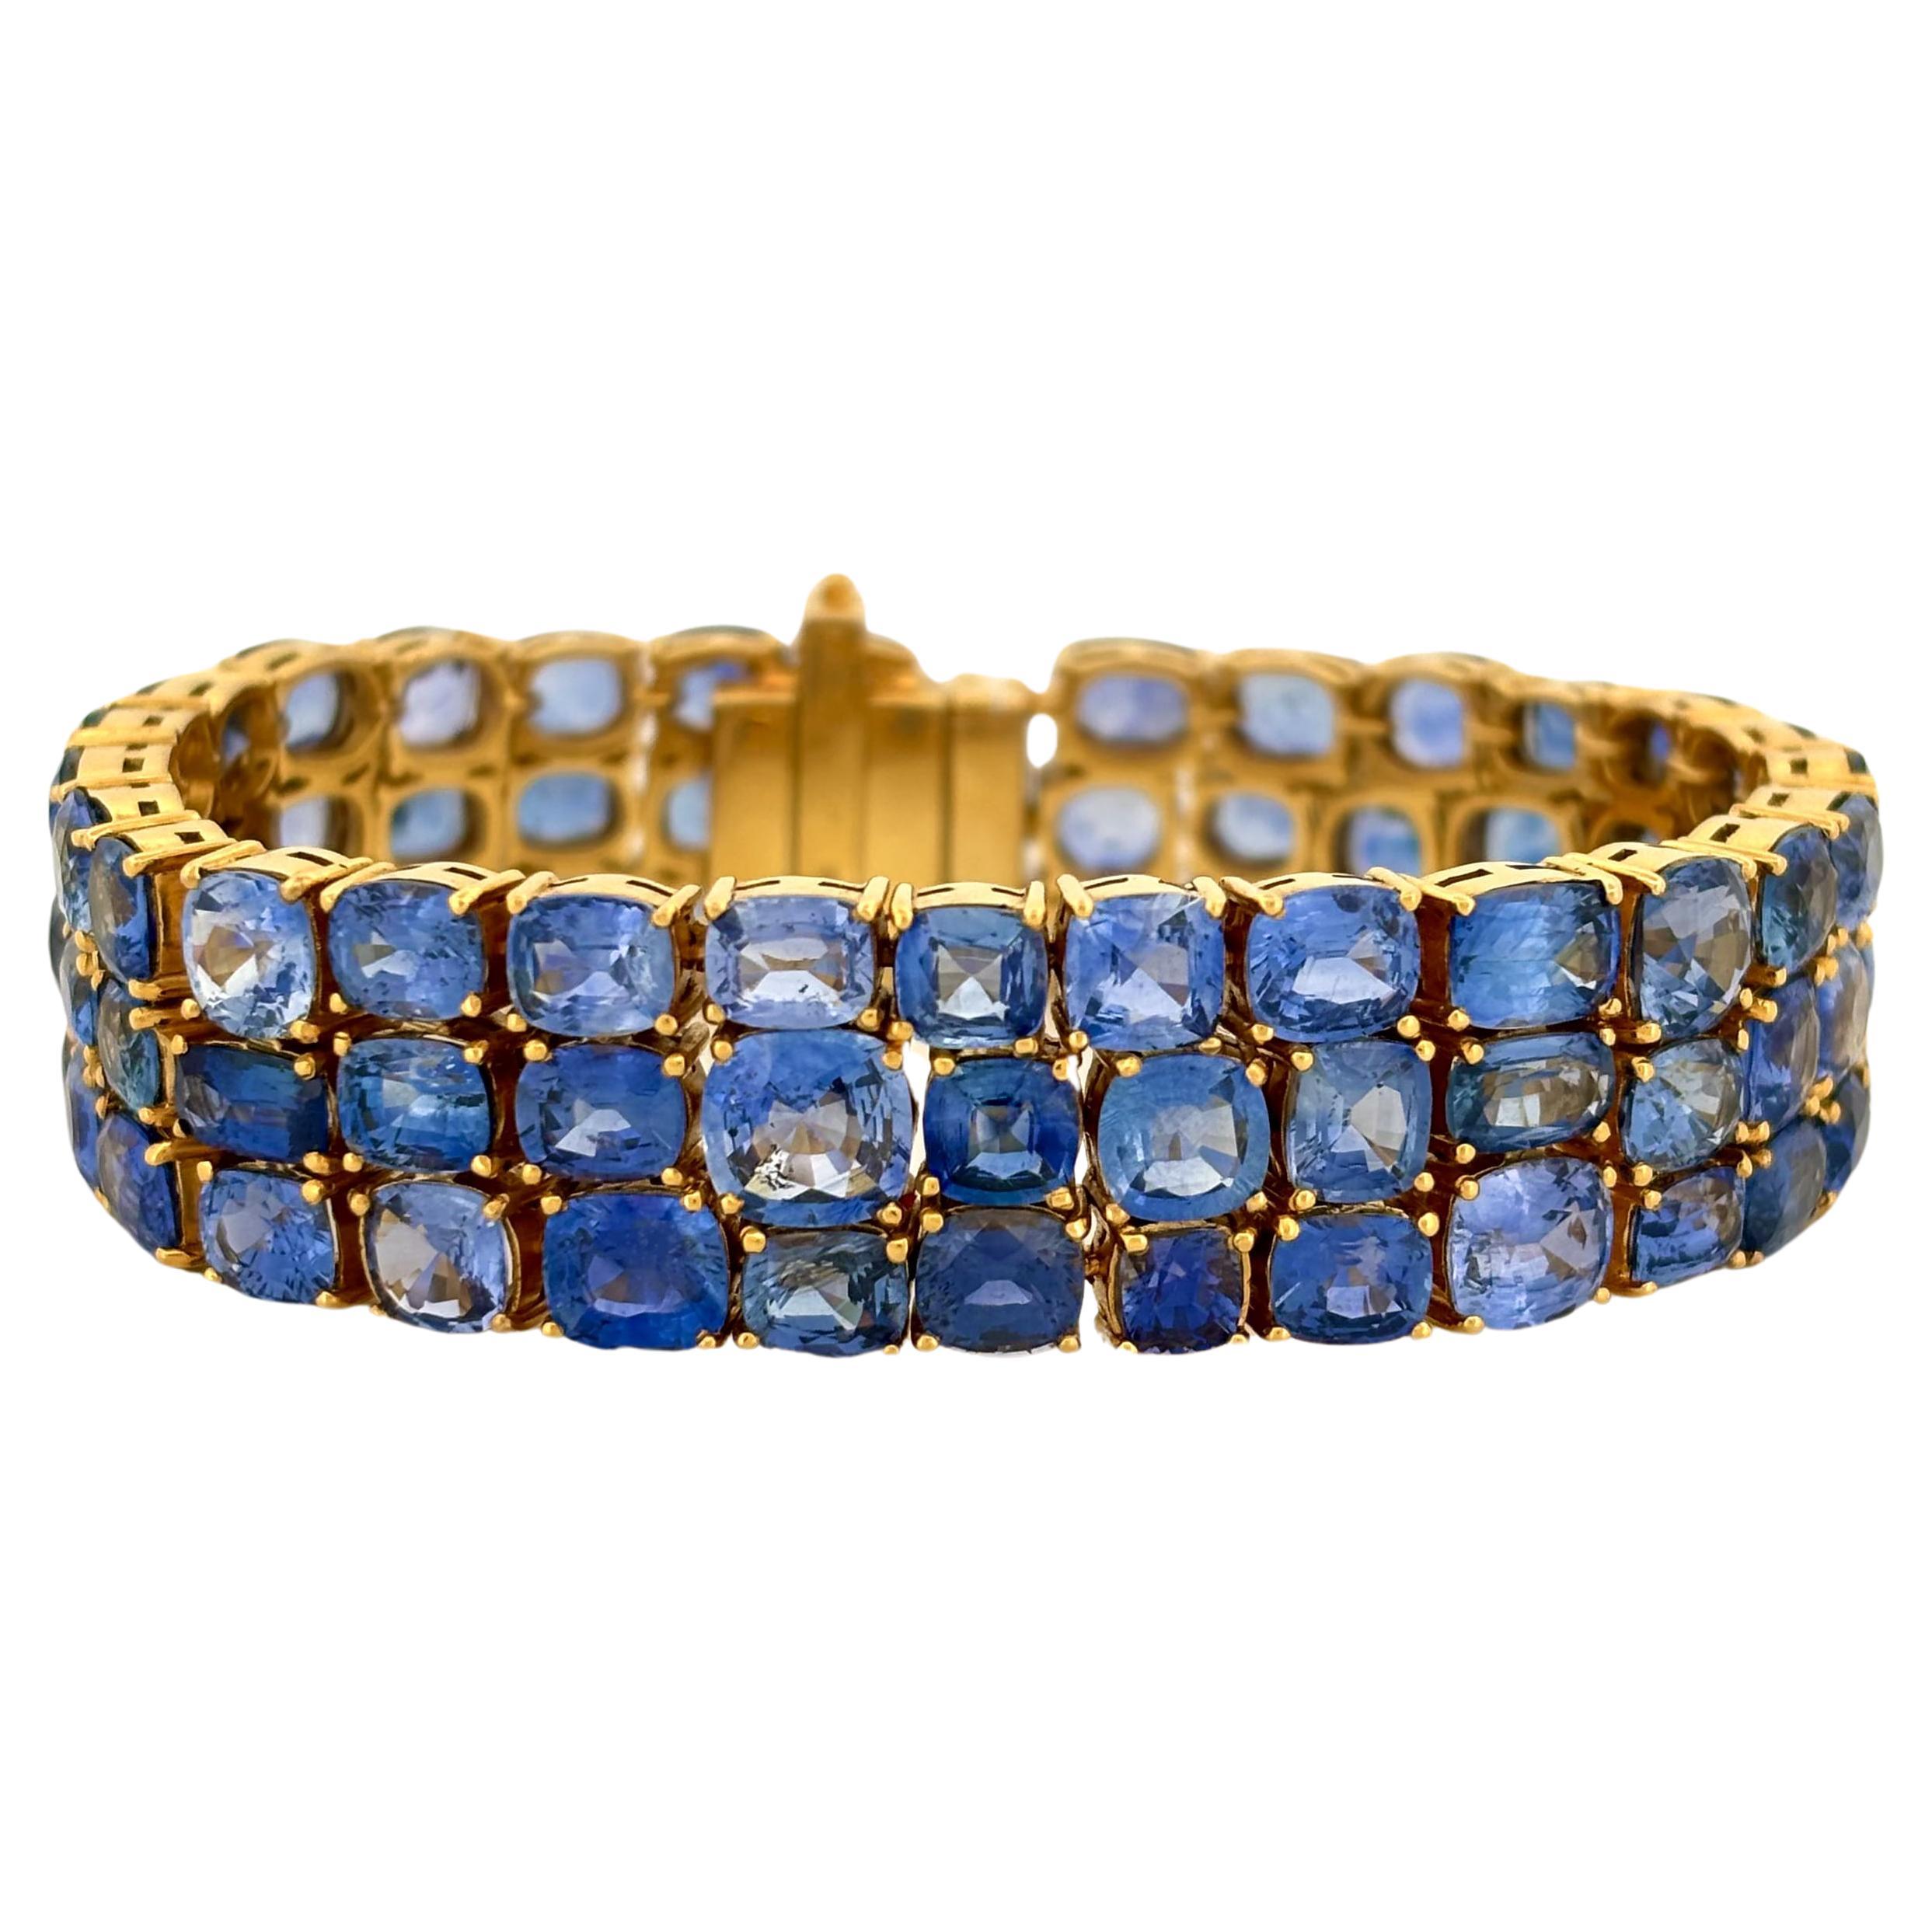 66.4 ct Ceylon Blue Sapphires Contemporary style Unisex Statement Bracelet